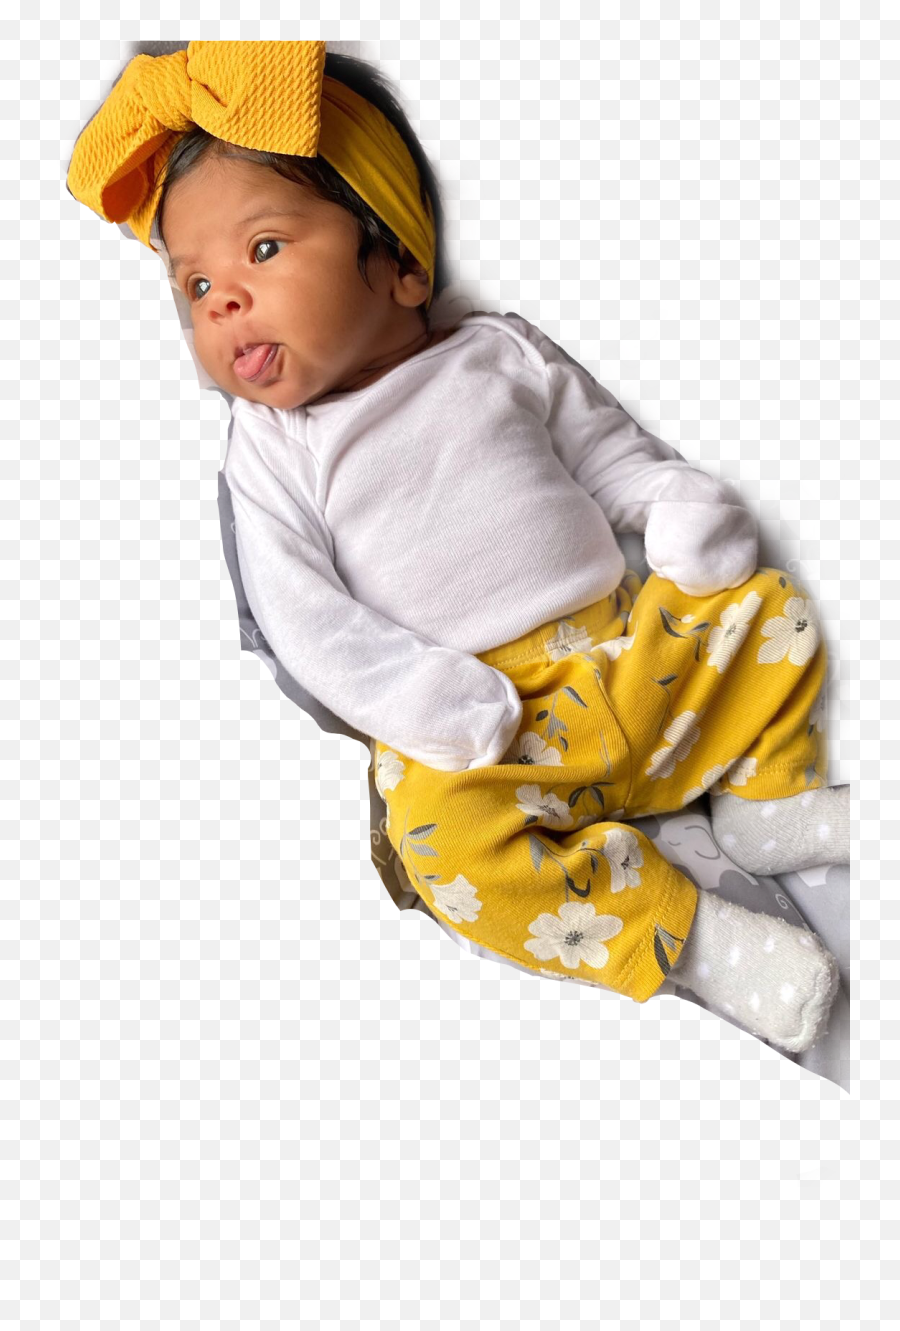 The Most Edited Newborn Baby Picsart - Imvu Newborn Baby Png Emoji,Babies That Look Like Emojis Videos